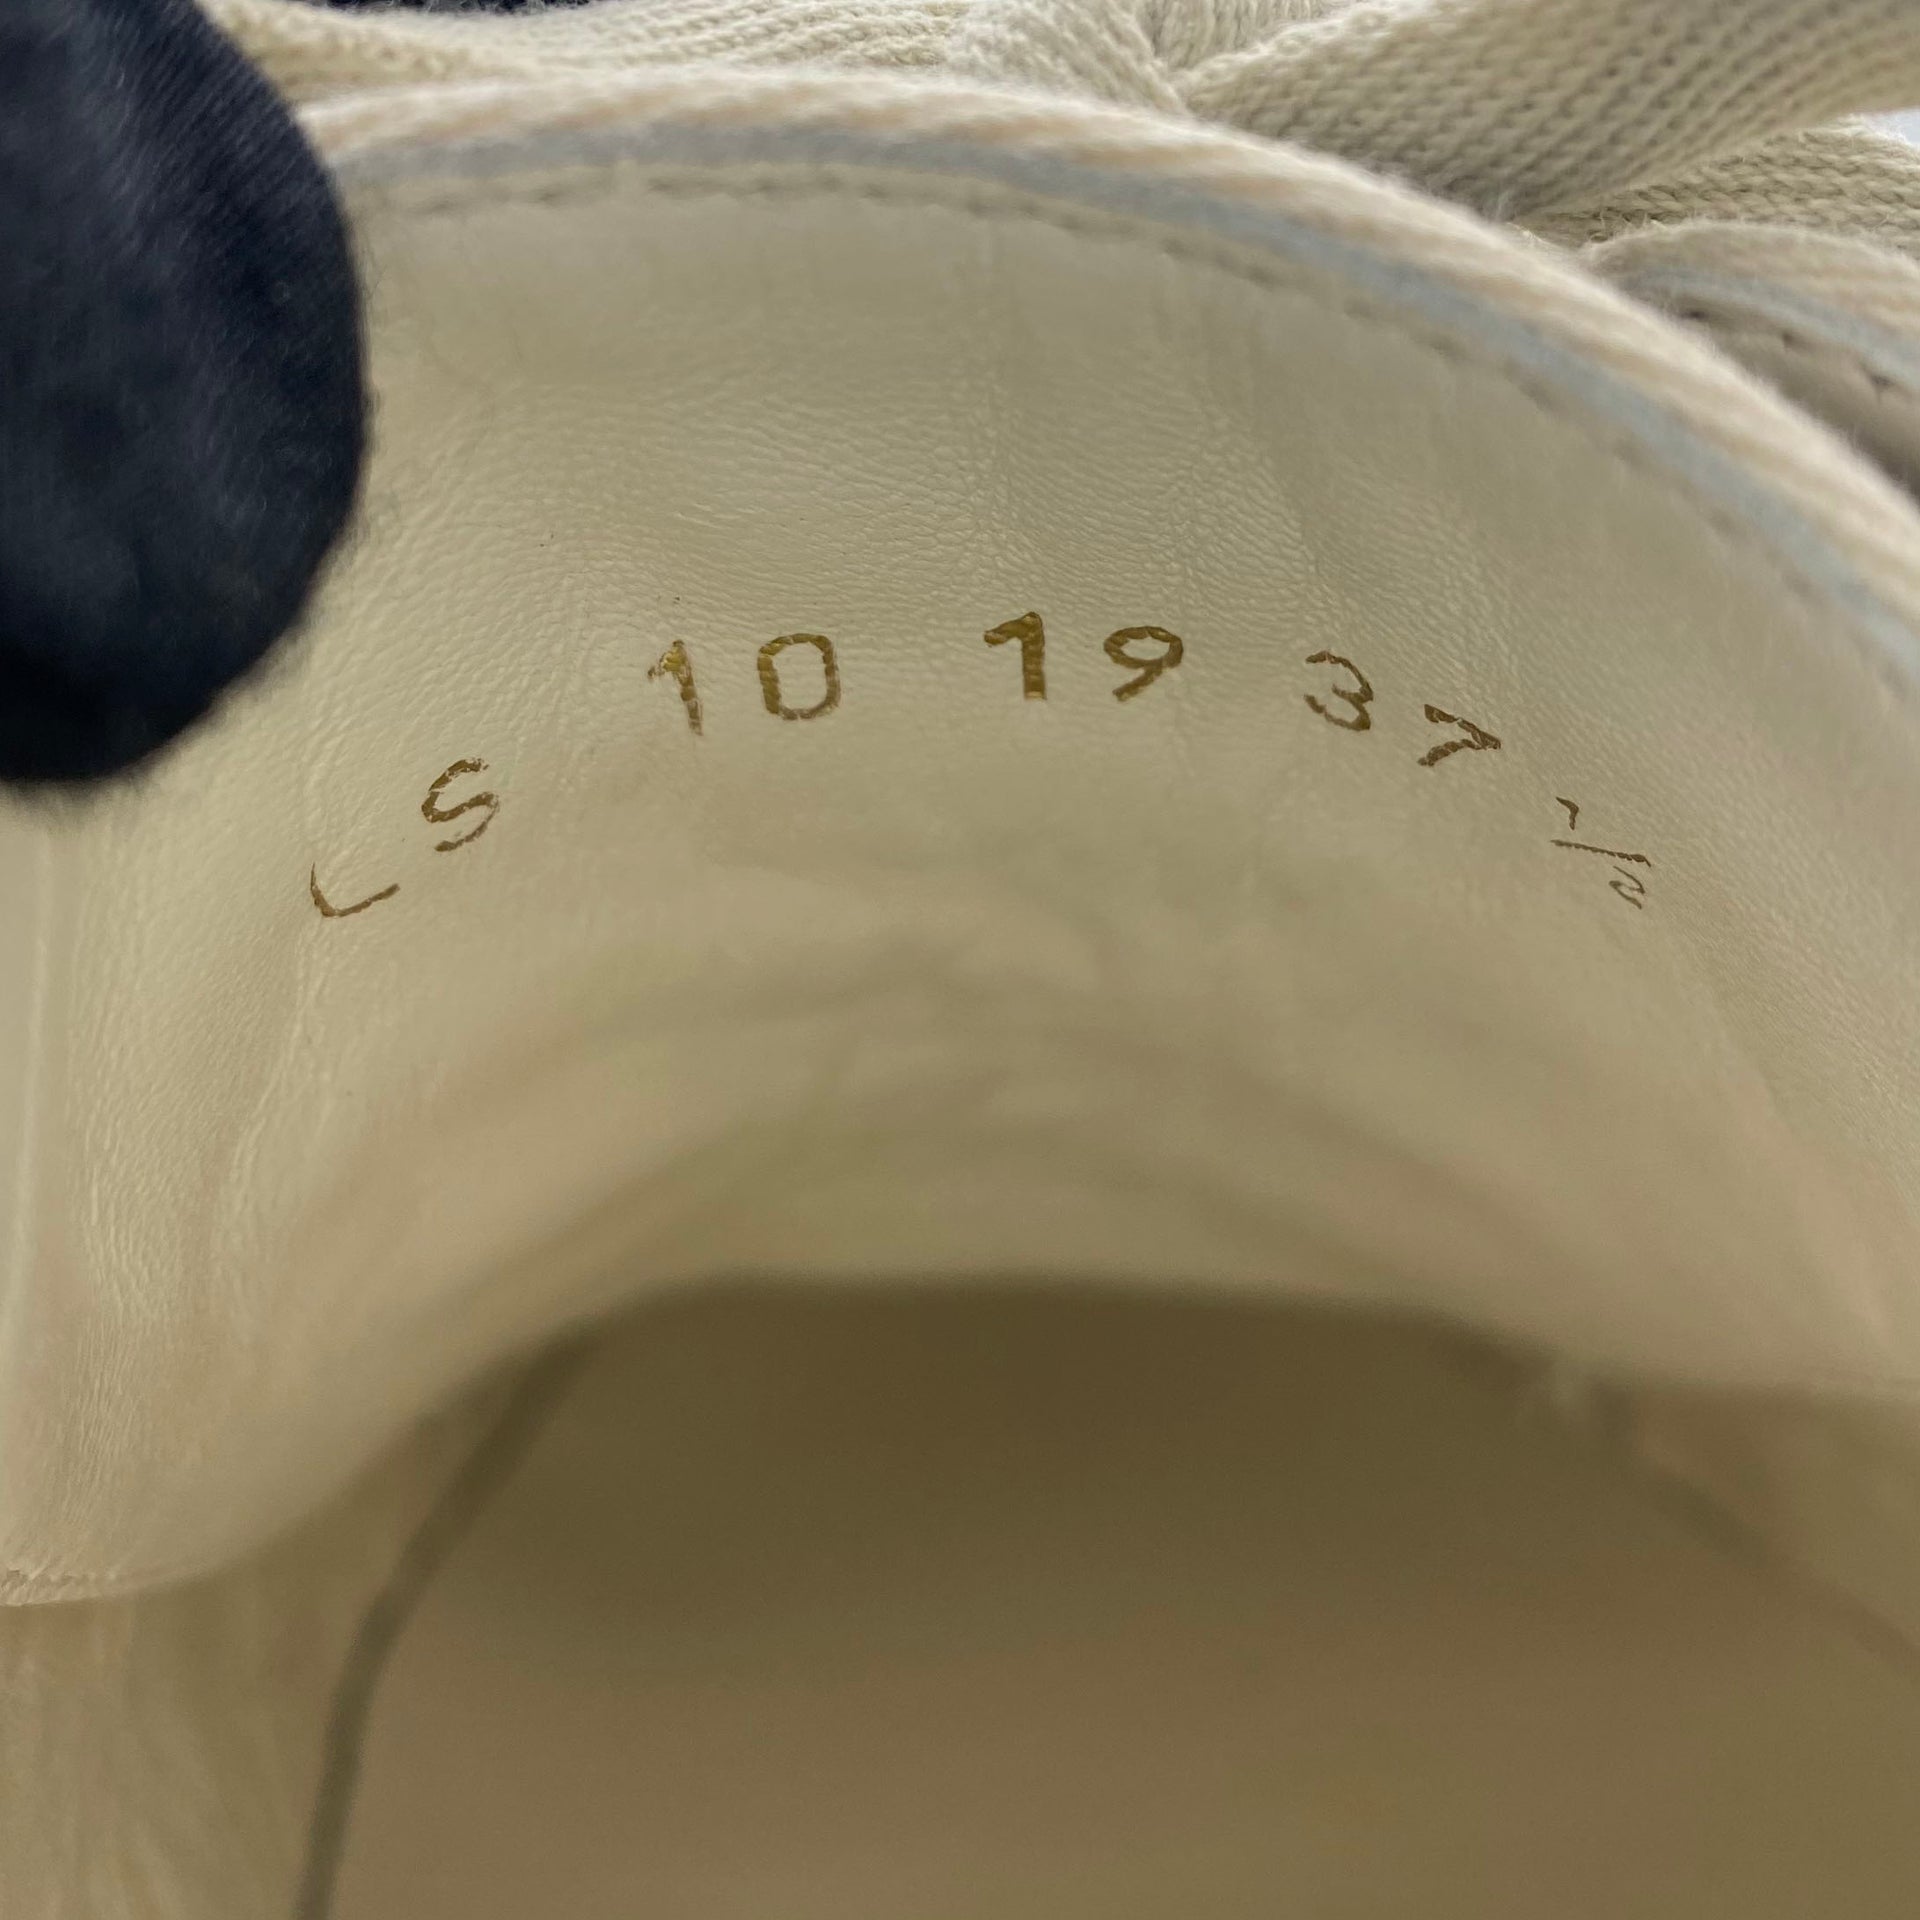 Oblique Embroidered Cotton Walk'N'Dior Sneaker 37.5